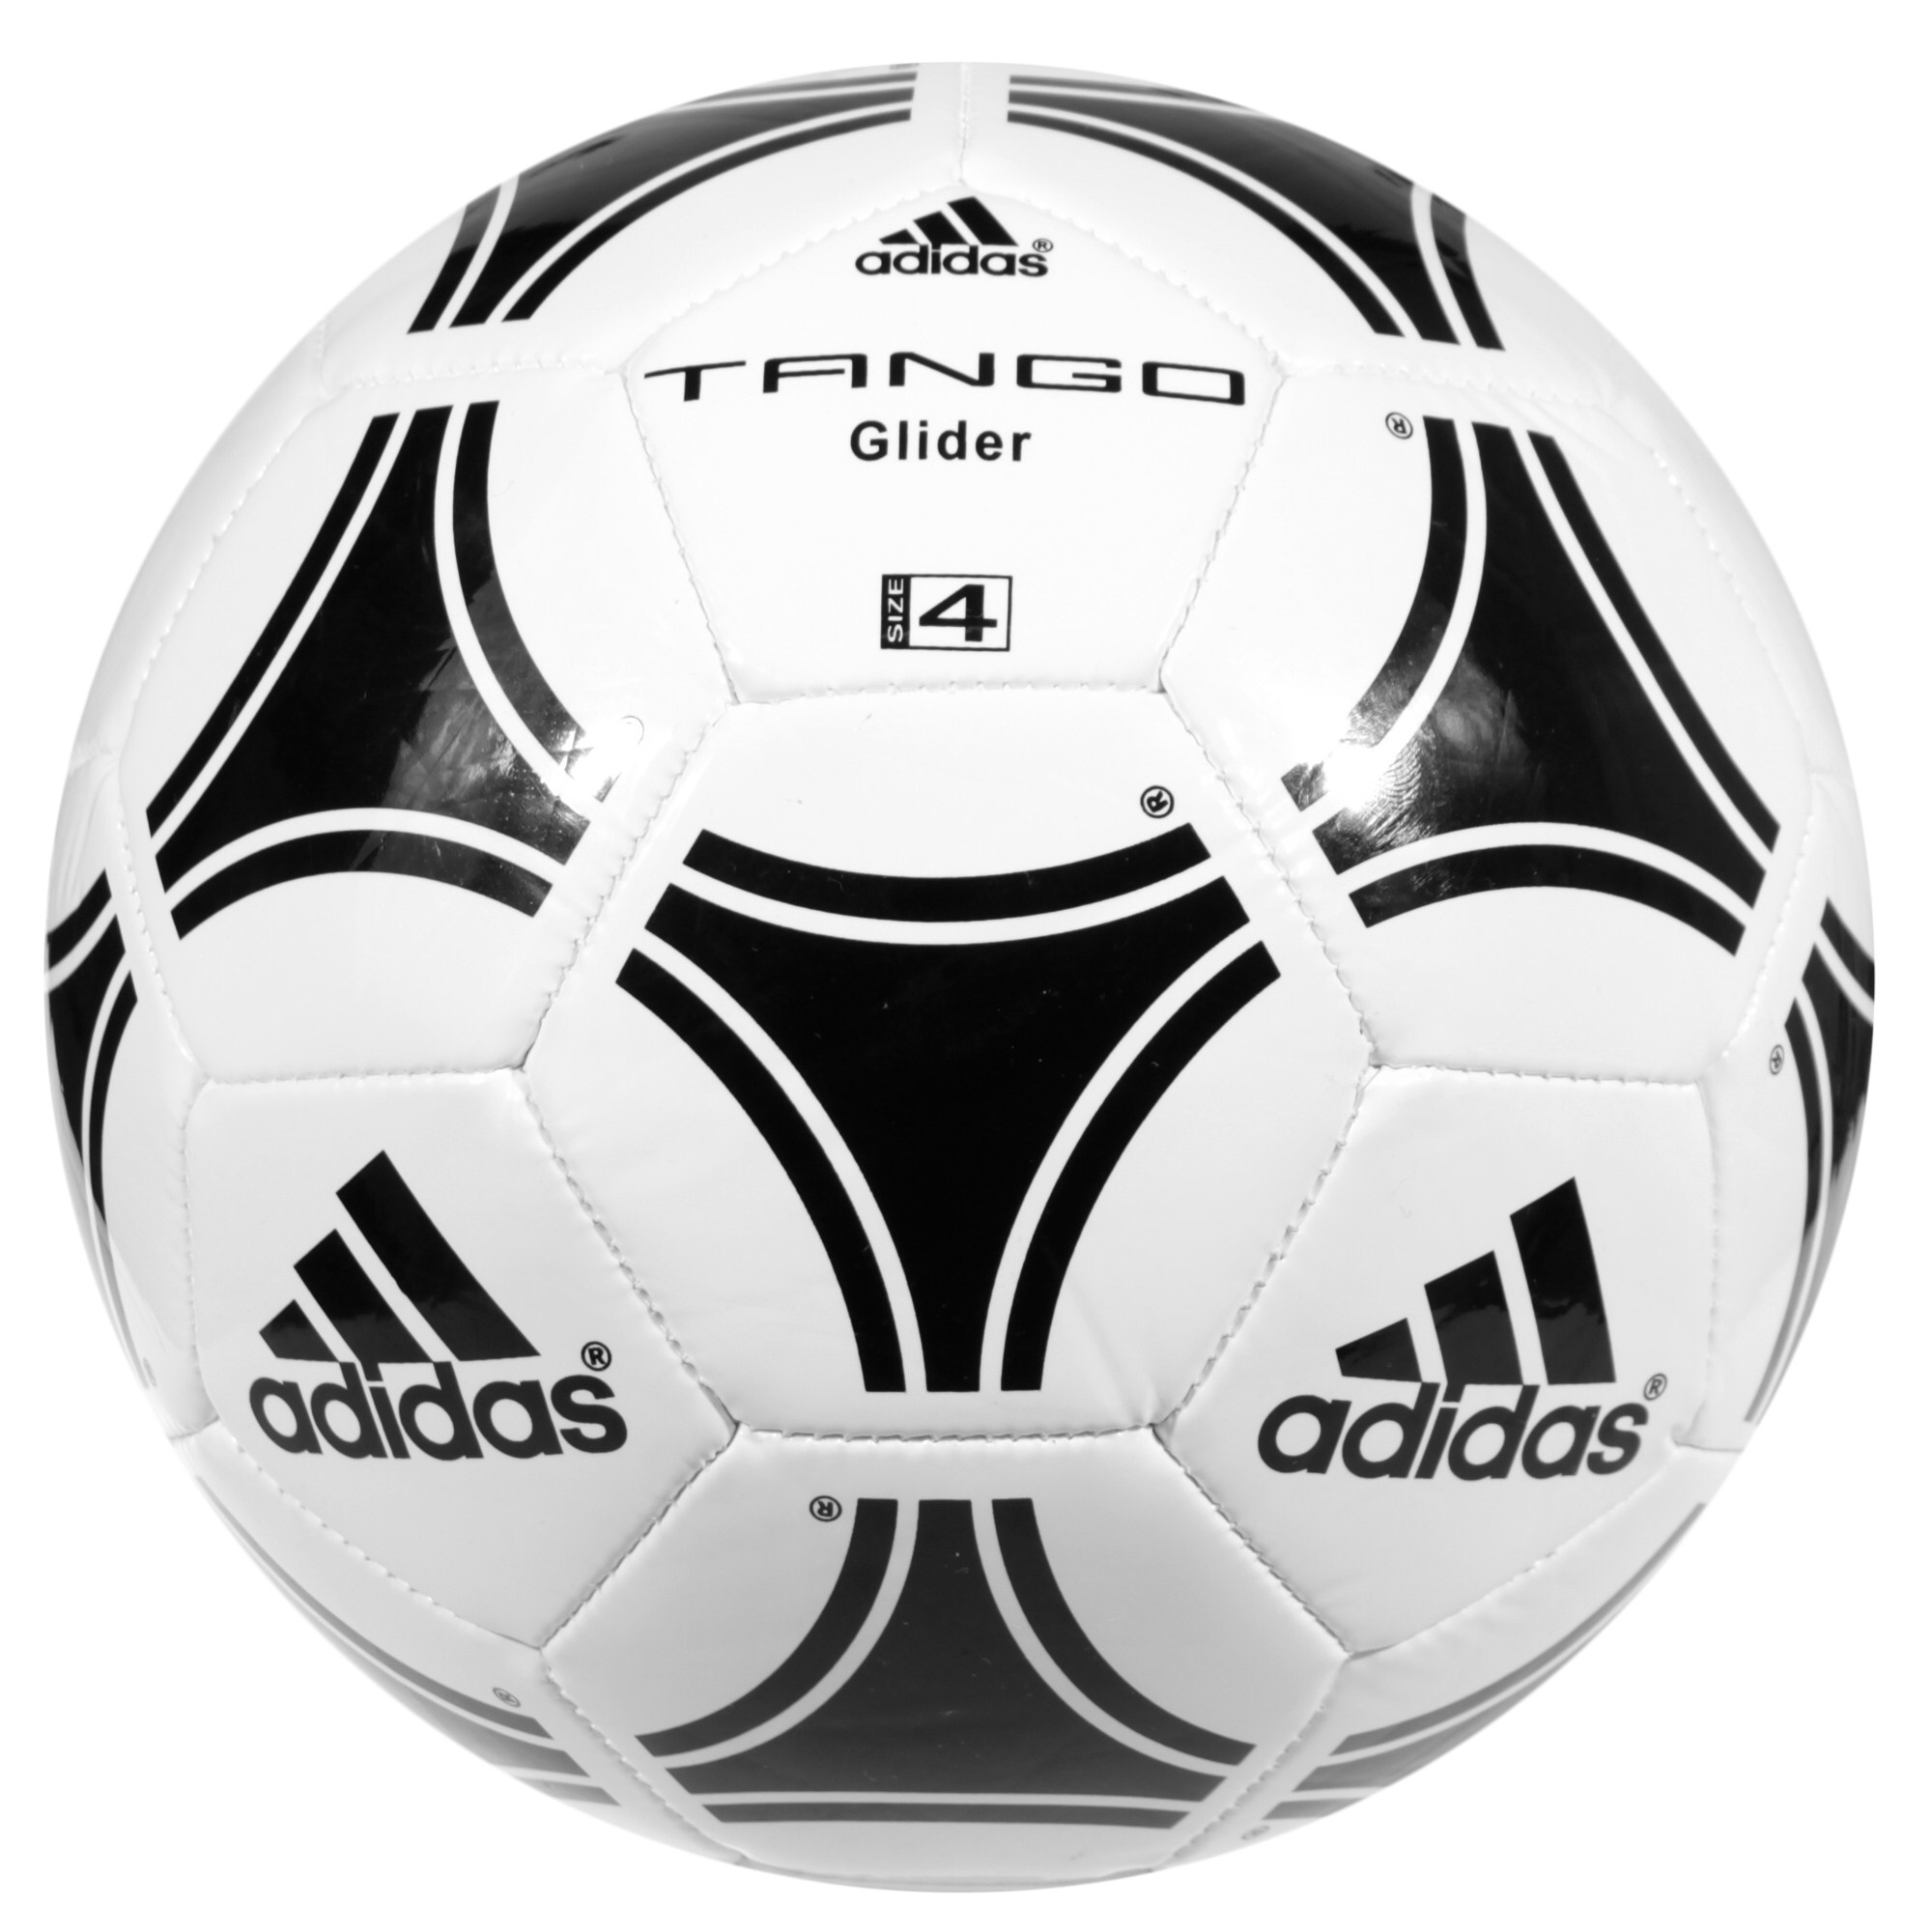 Adidas Tango Glider Football - The 